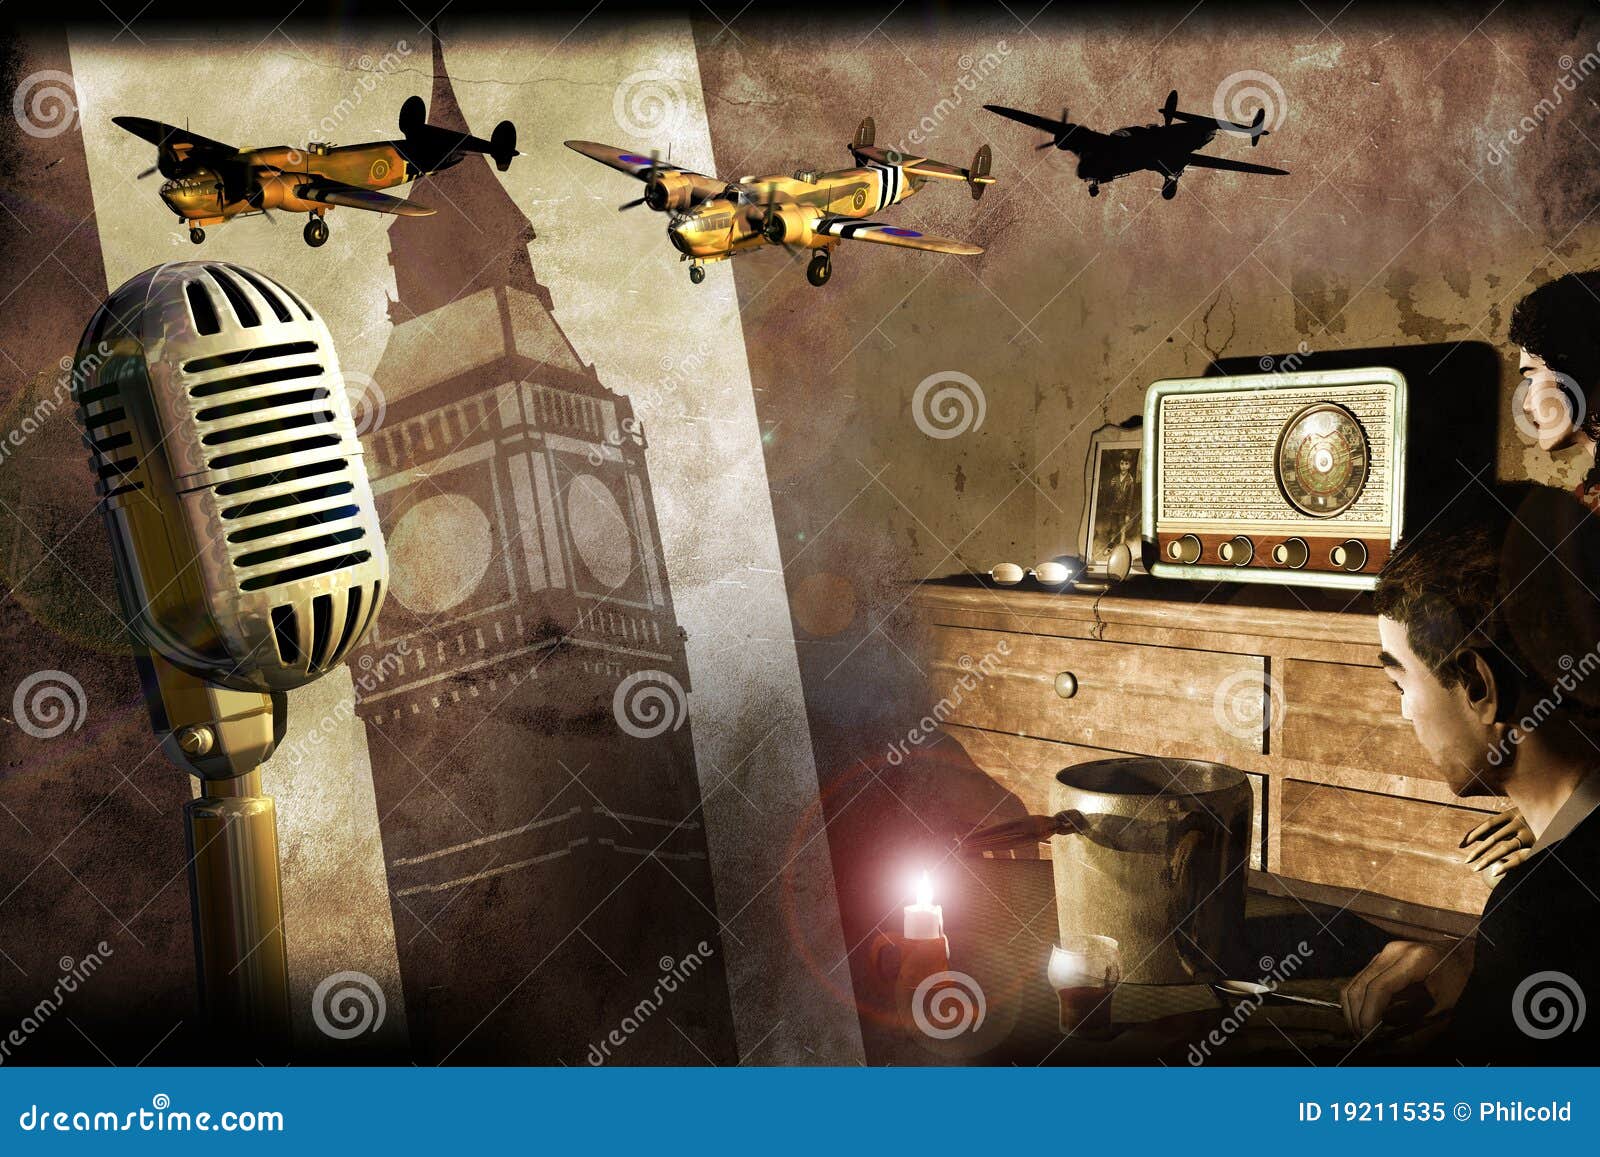 london radio in world war ii